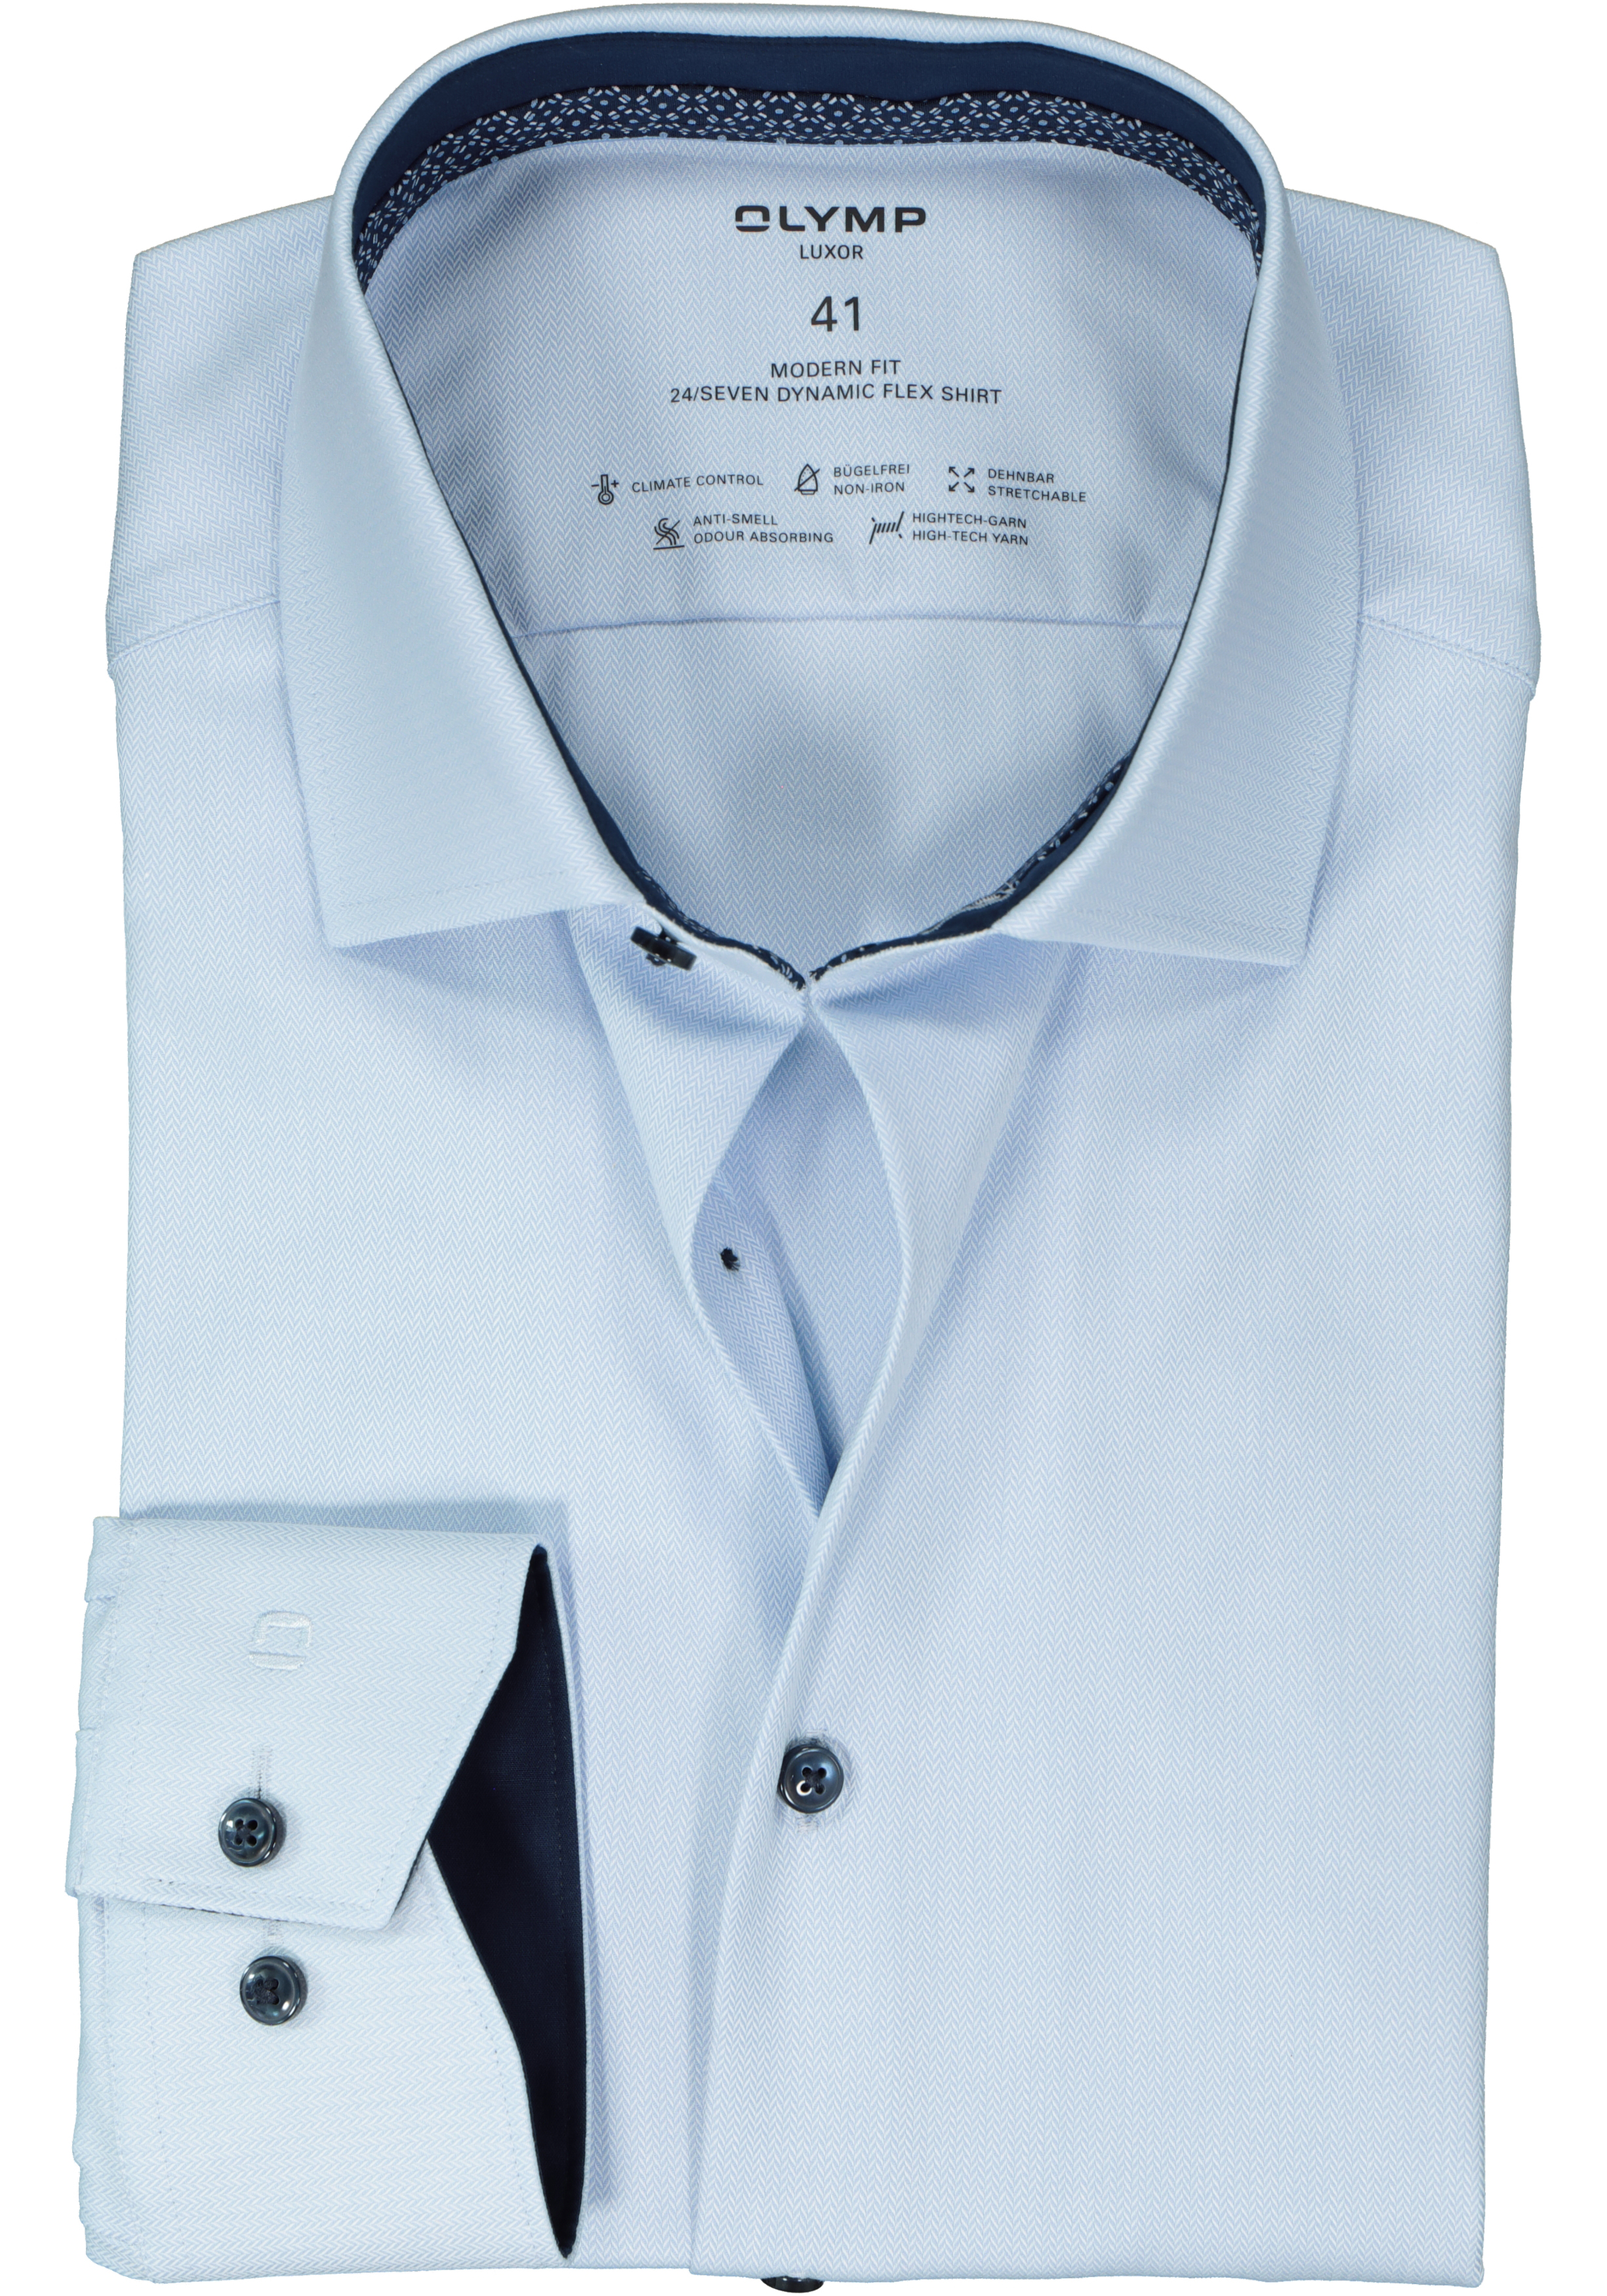 OLYMP 24/7 modern fit overhemd, herringbone, lichtblauw (contrast)